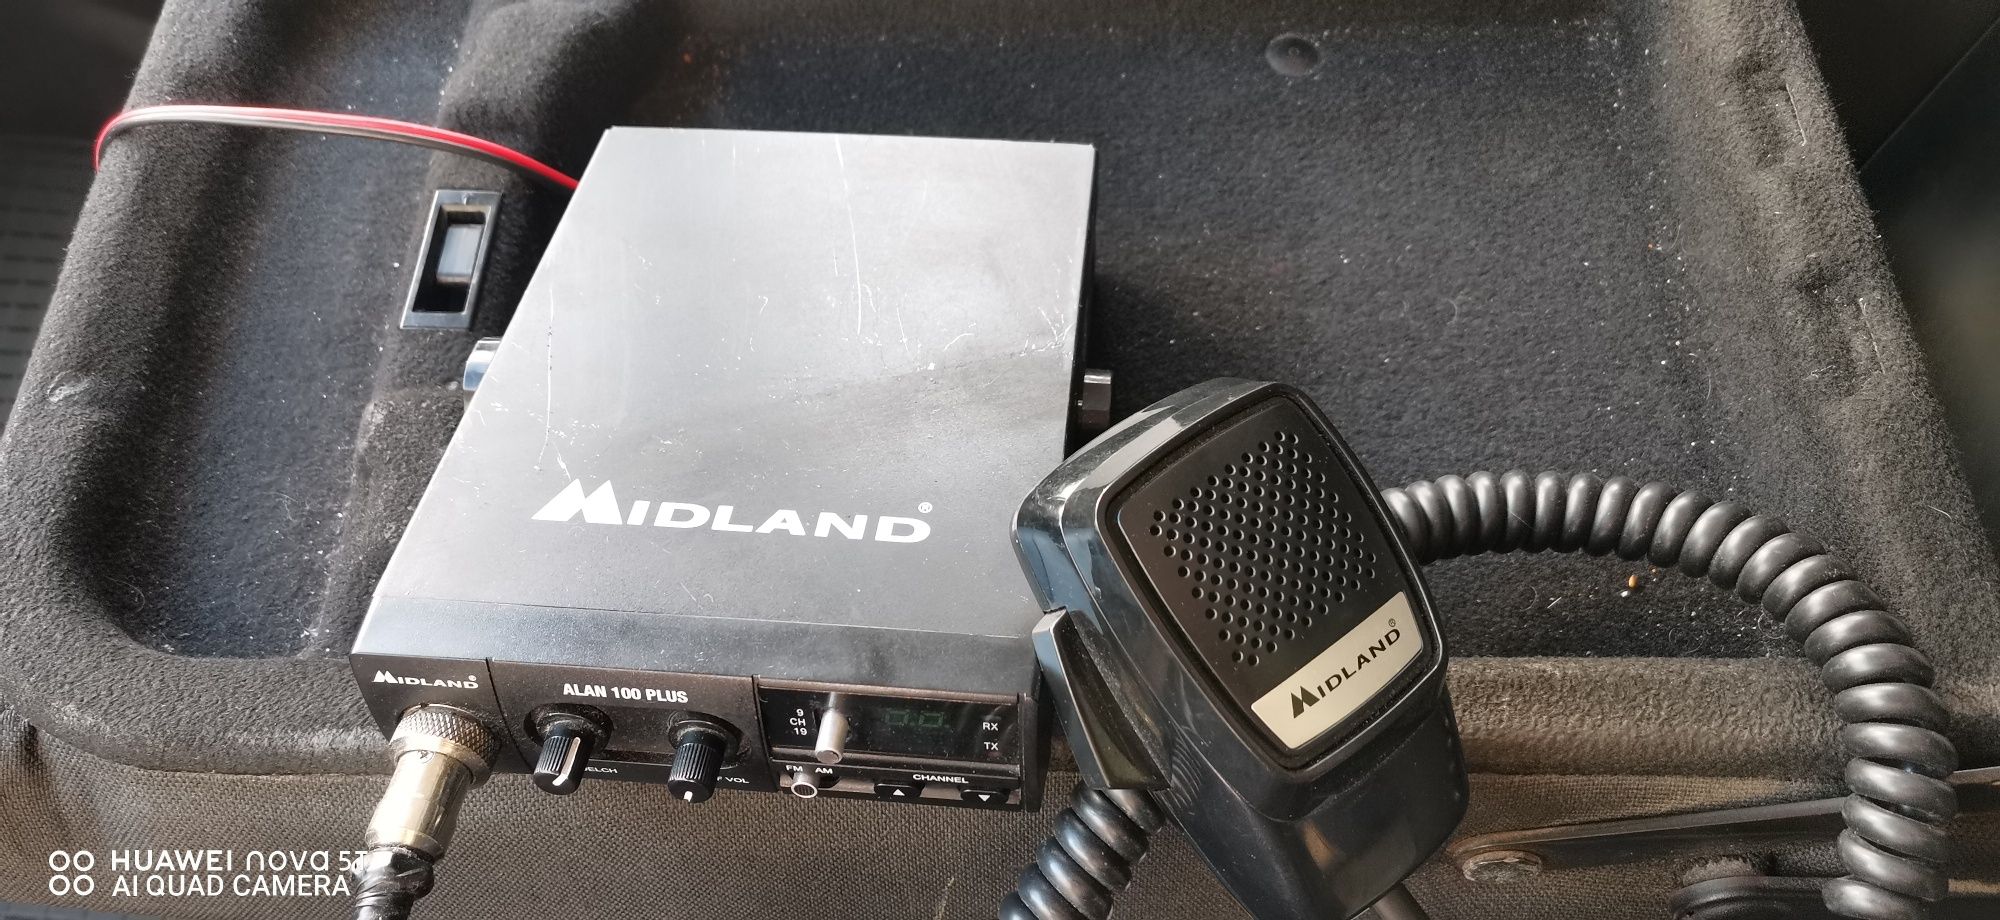 Stație emisie recepție Midland Alan 100 Plus